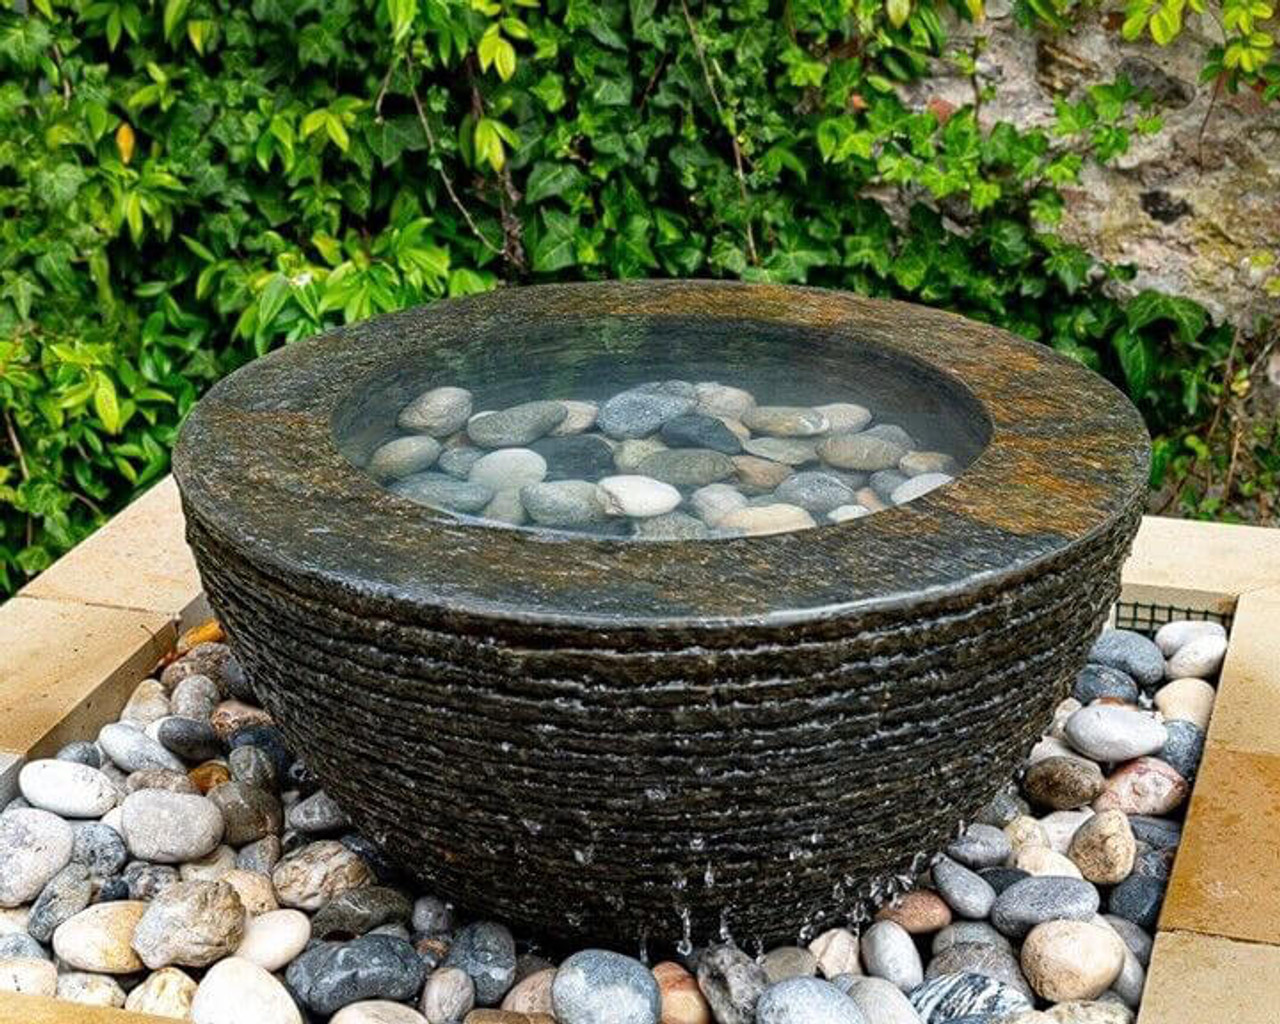 Tranquil Decor Infinity Bowl Fountain Kit - 16"